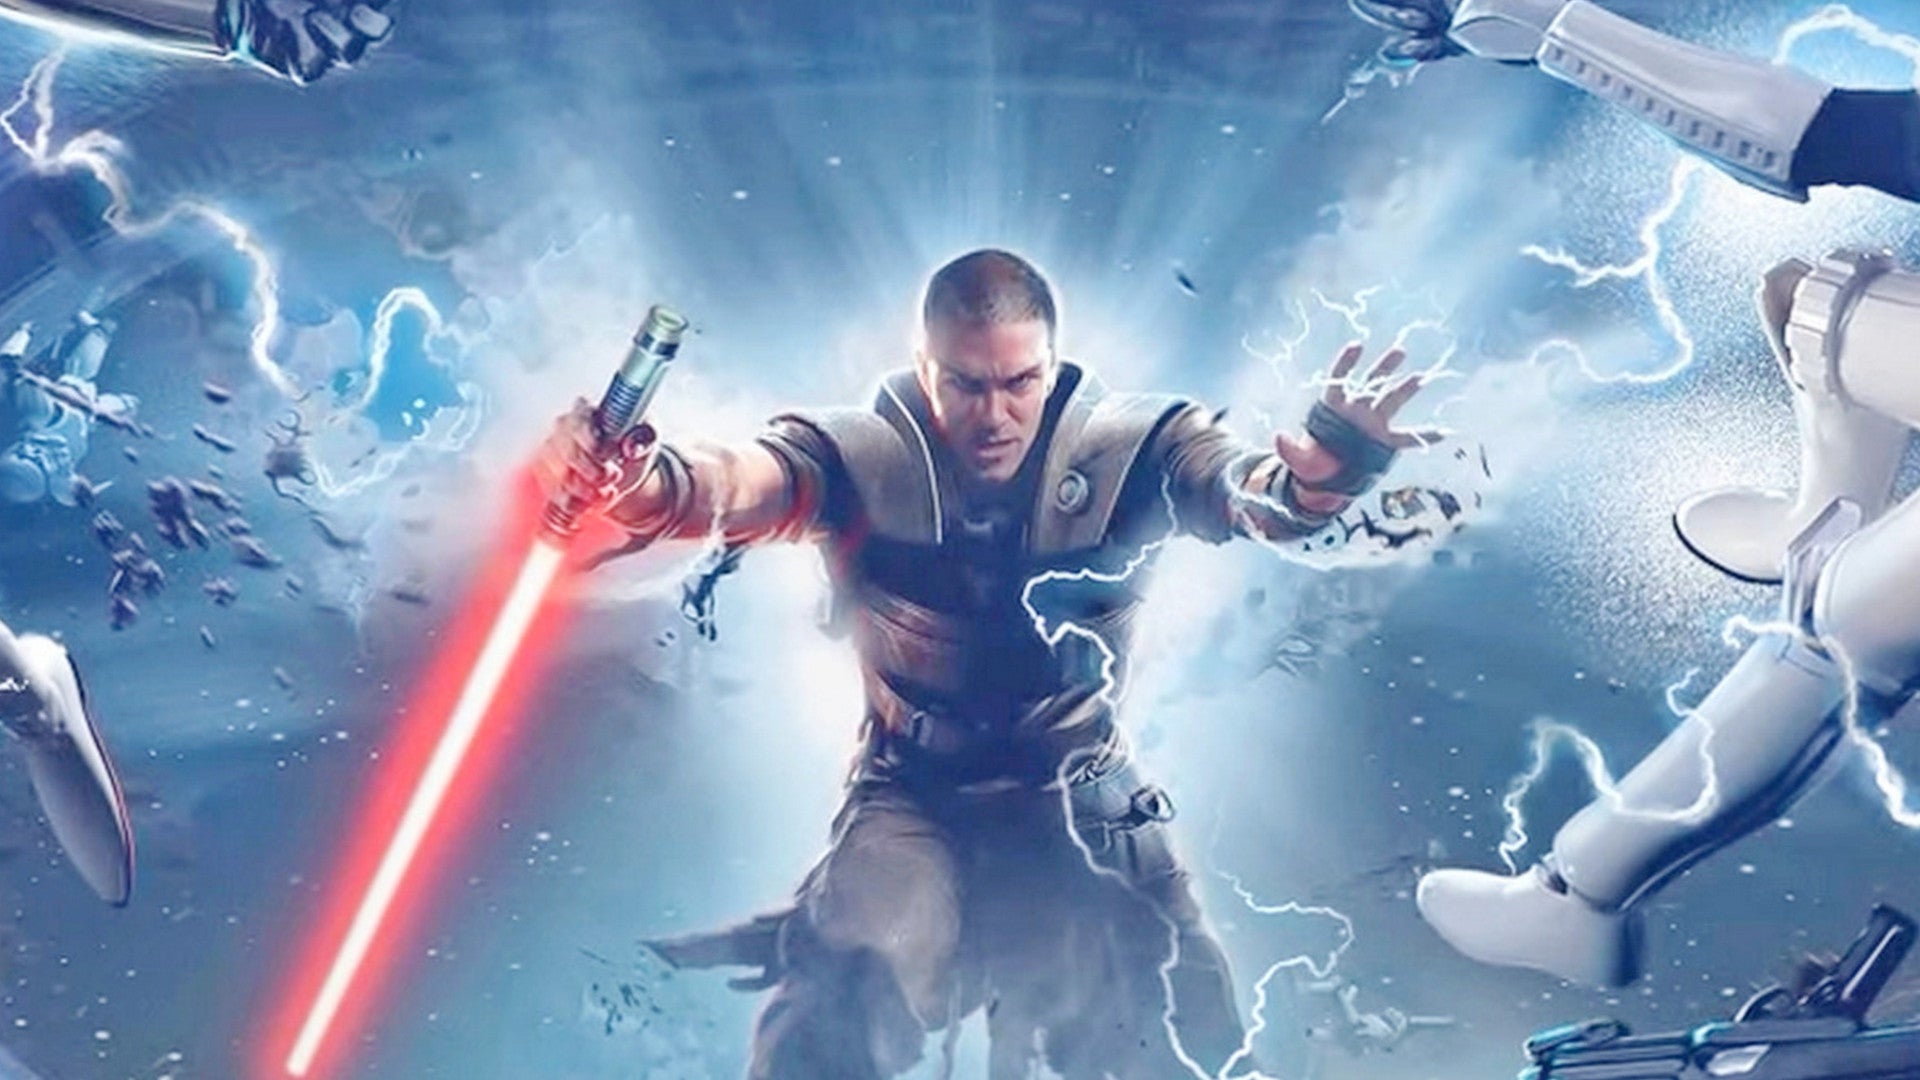 Bilder zu Star Wars: The Force Unleashed - Komplettlösung, Tipps, Holocrons & Extras